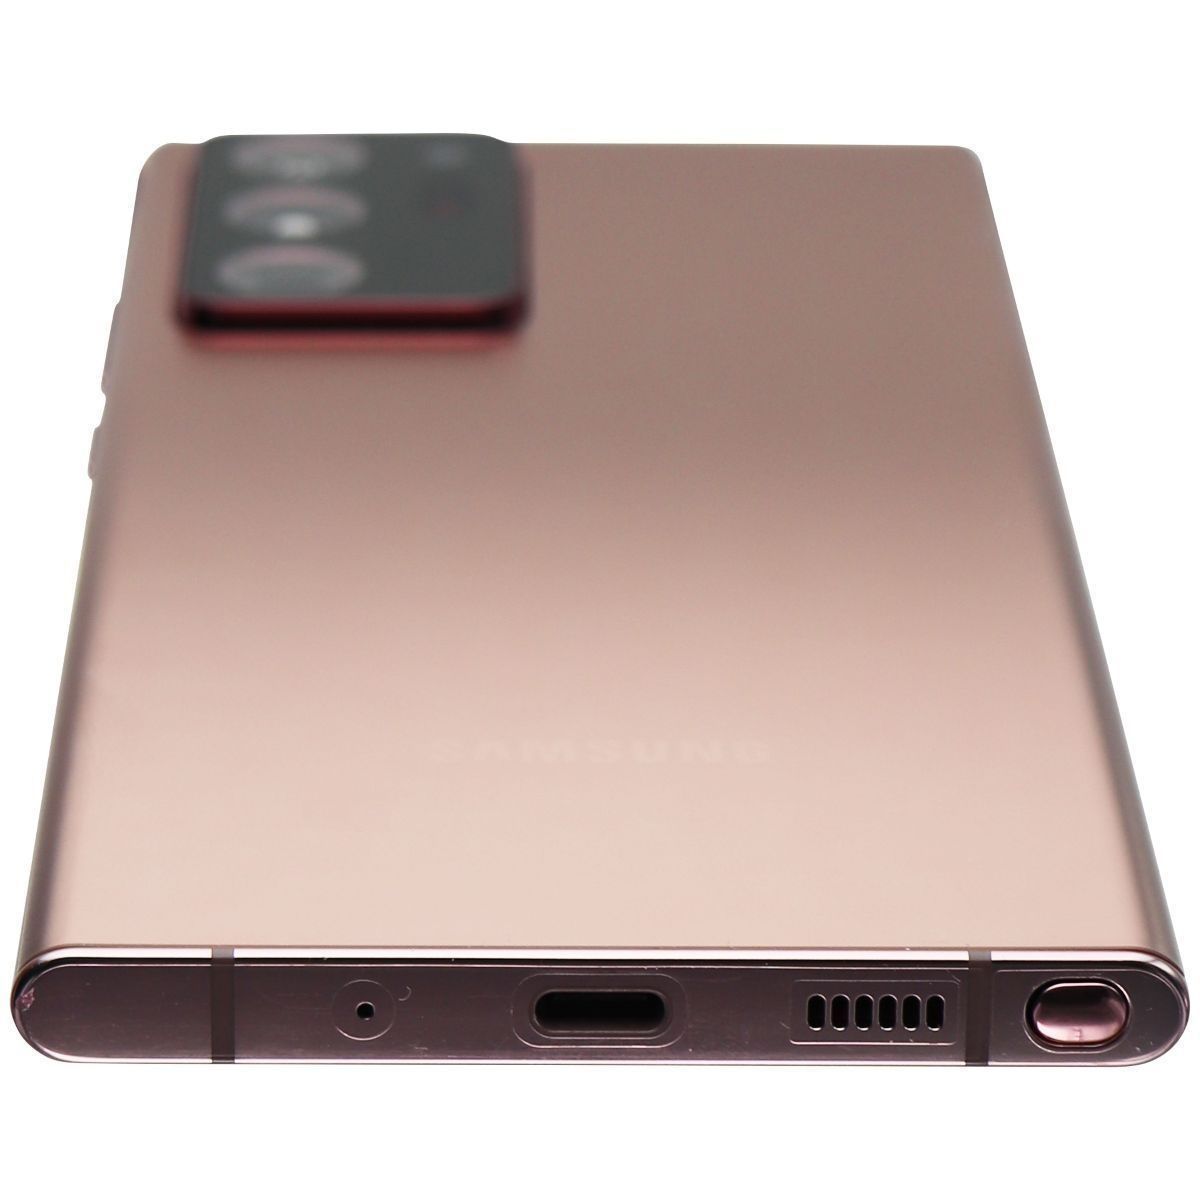  Samsung Galaxy Note20 Ultra 5G 128GB - Mystic Black (Verizon) :  Cell Phones & Accessories